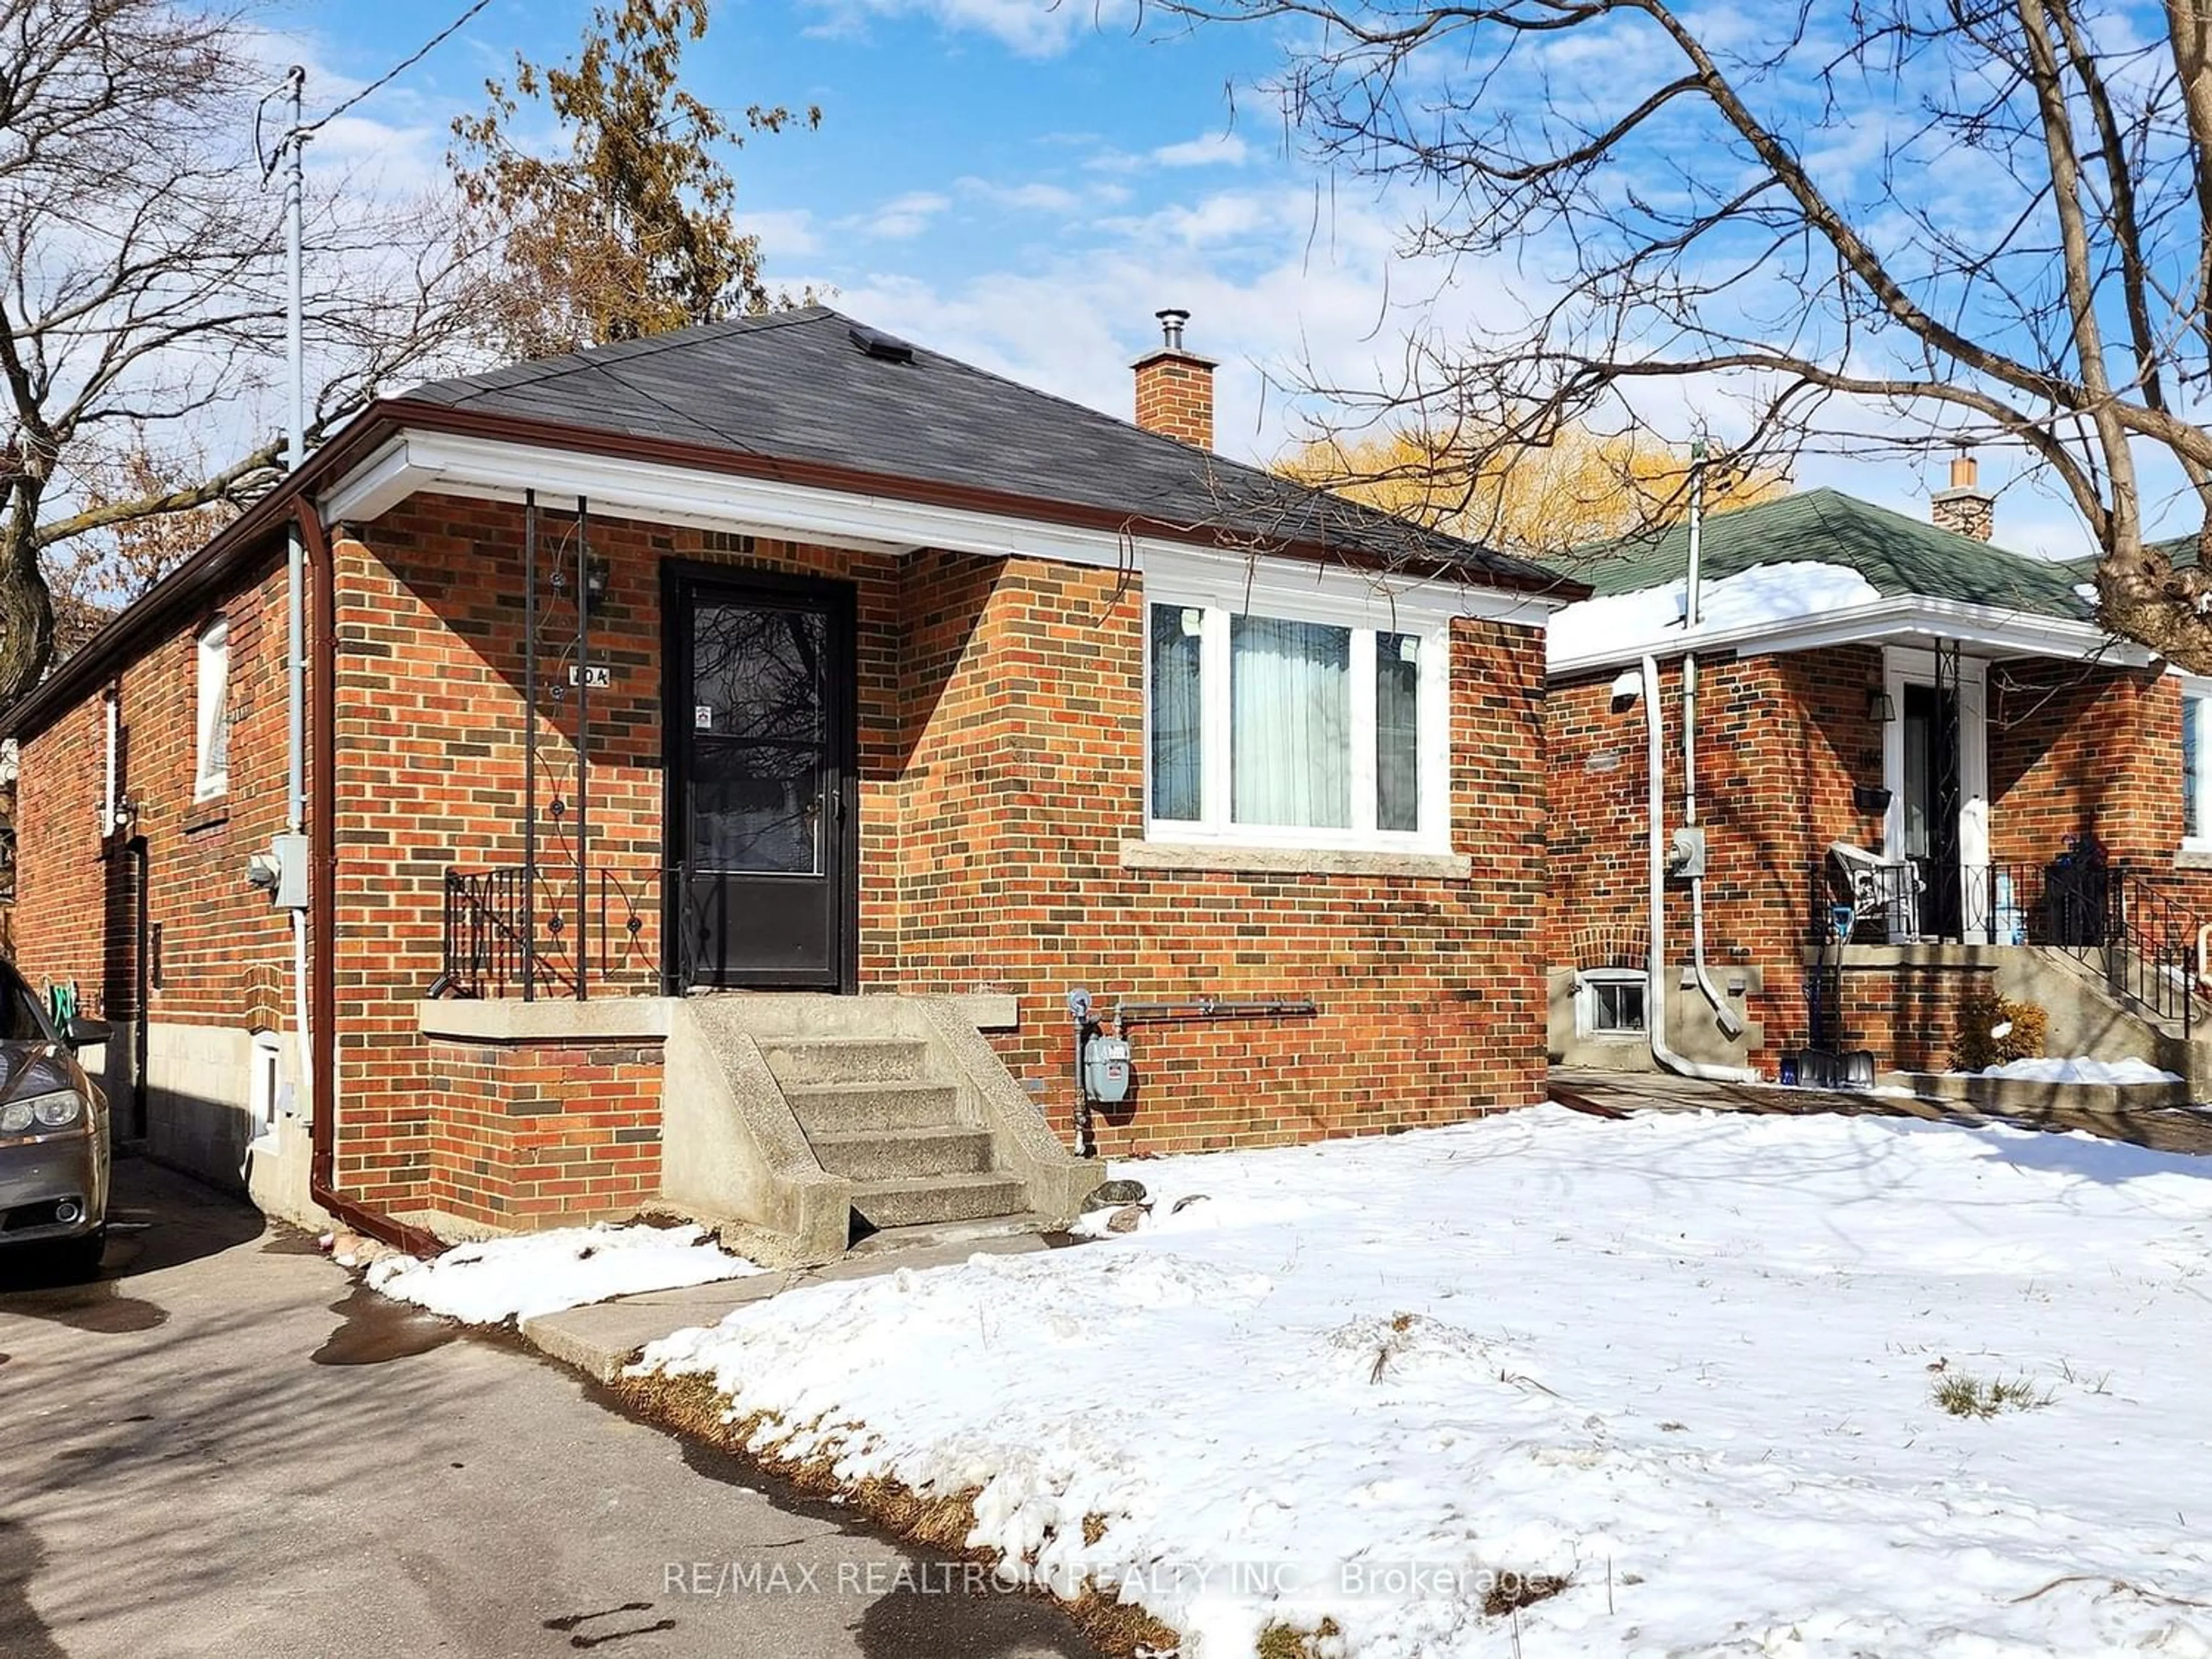 Home with brick exterior material for 104 Galbraith Ave, Toronto Ontario M4B 2B7